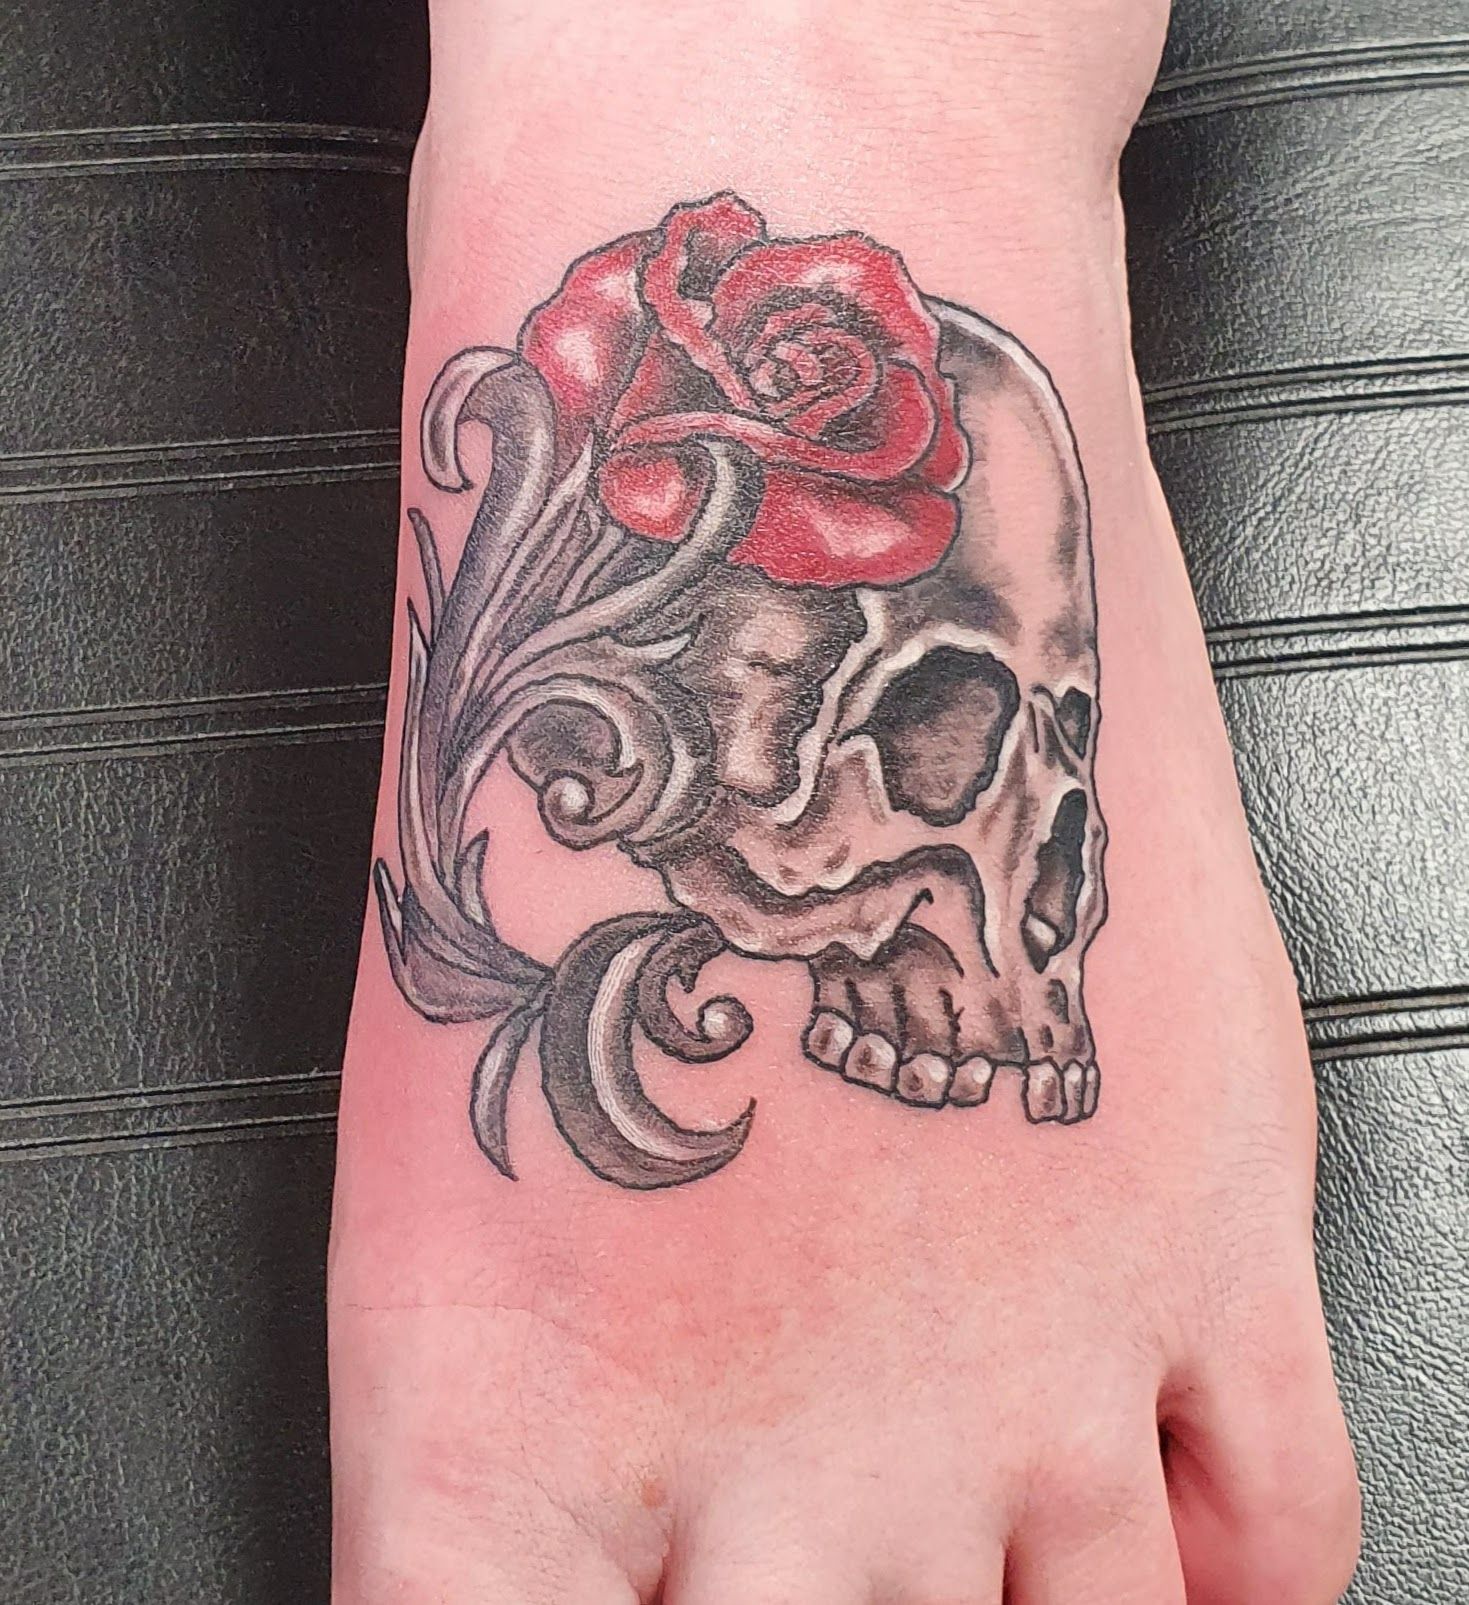 skull and rose tattoo